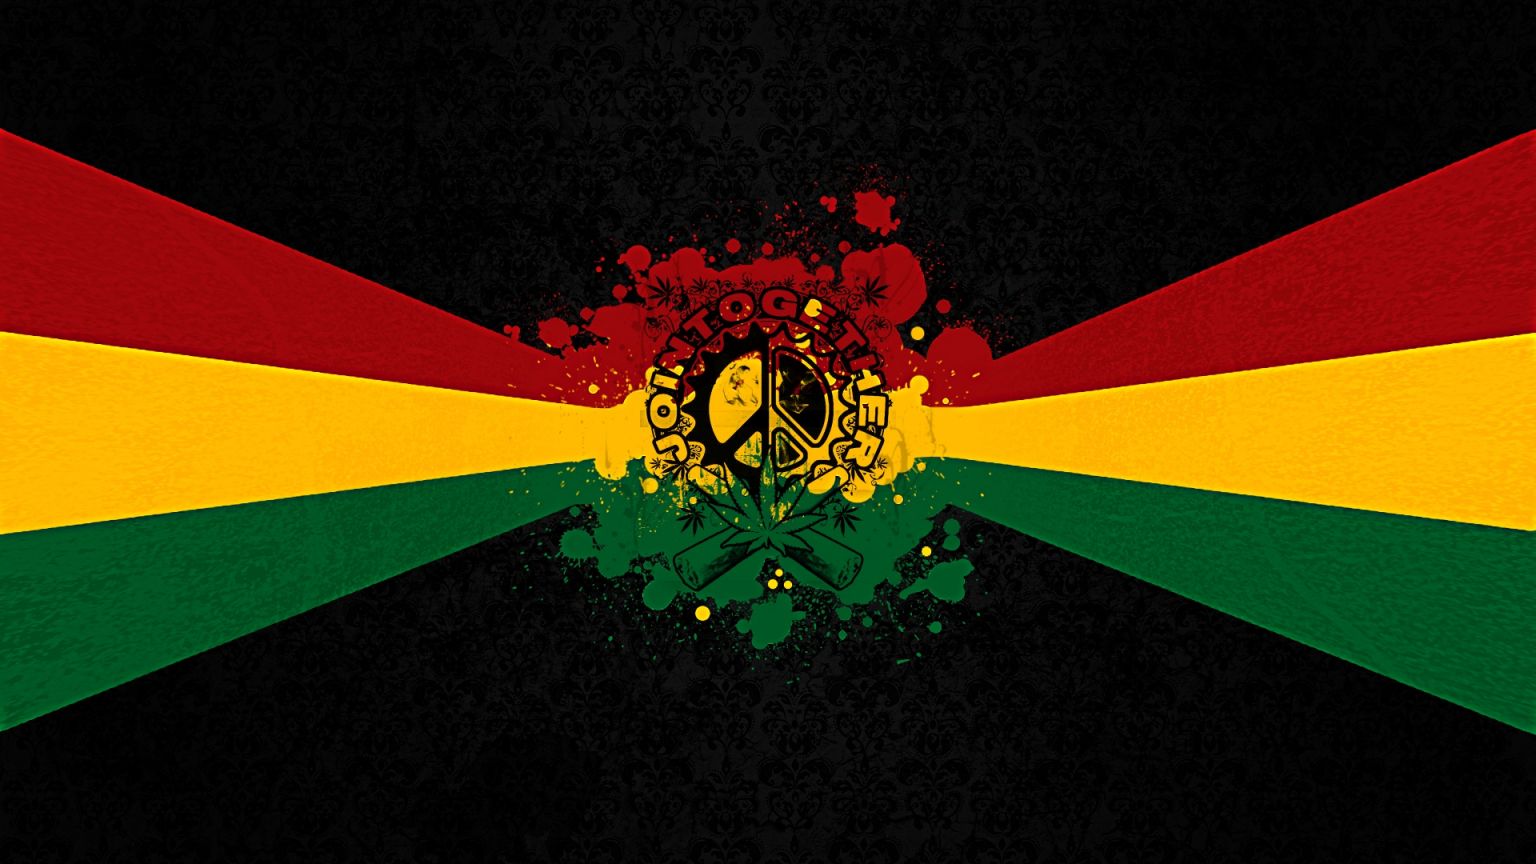 Free download Reggae Lion Wallpaper Reggae [1920x1200] for your Desktop, Mobile & Tablet. Explore Reggae Lion Wallpaper. Rasta Wallpaper Hd, Rasta Lion Wallpaper, Rasta Colors Wallpaper